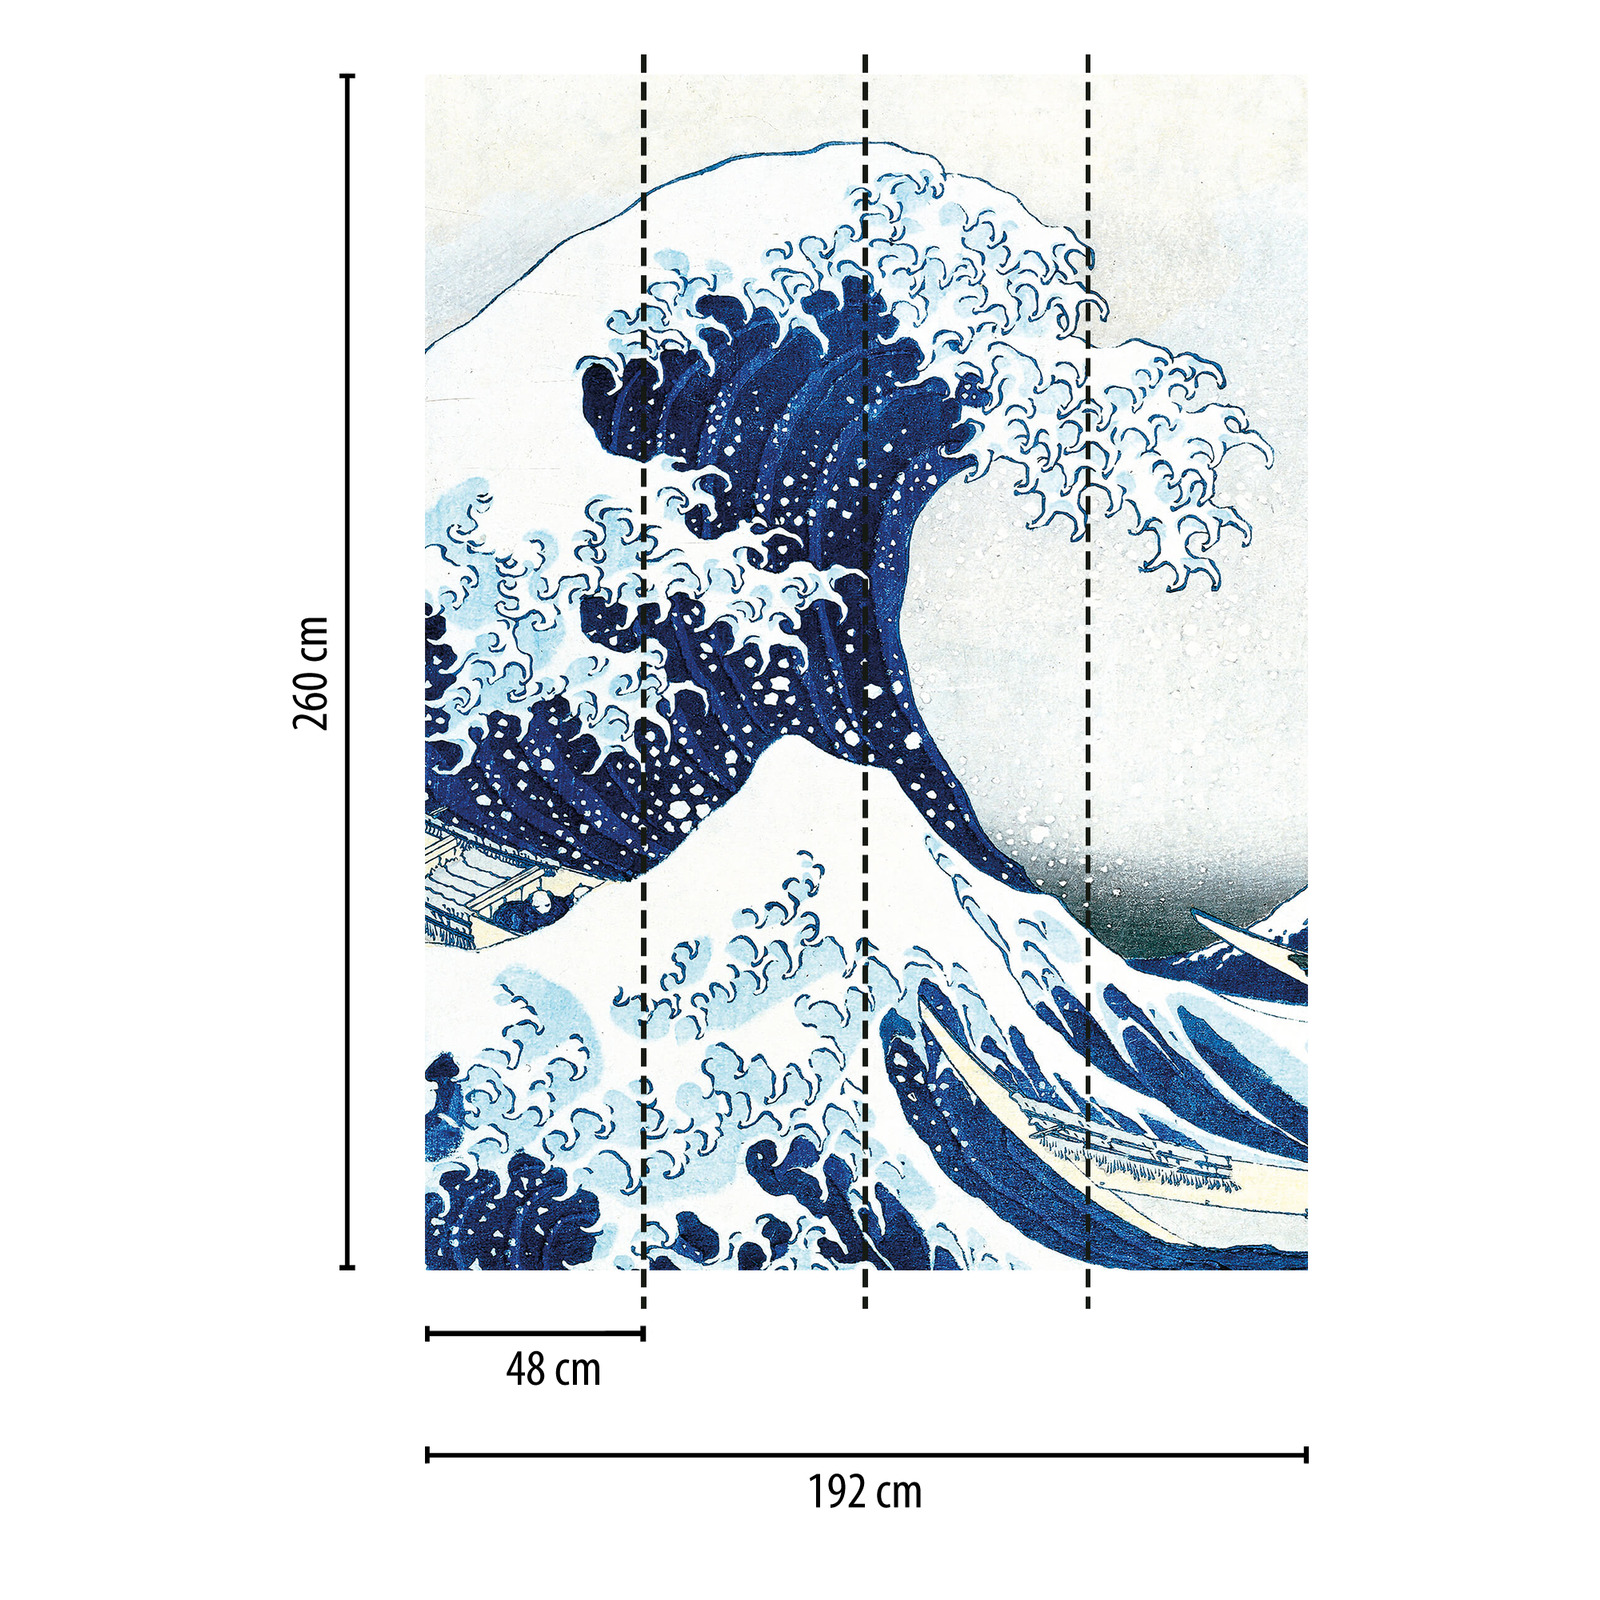             Photo wallpaper narrow wave drawn in blue - Blue, White
        